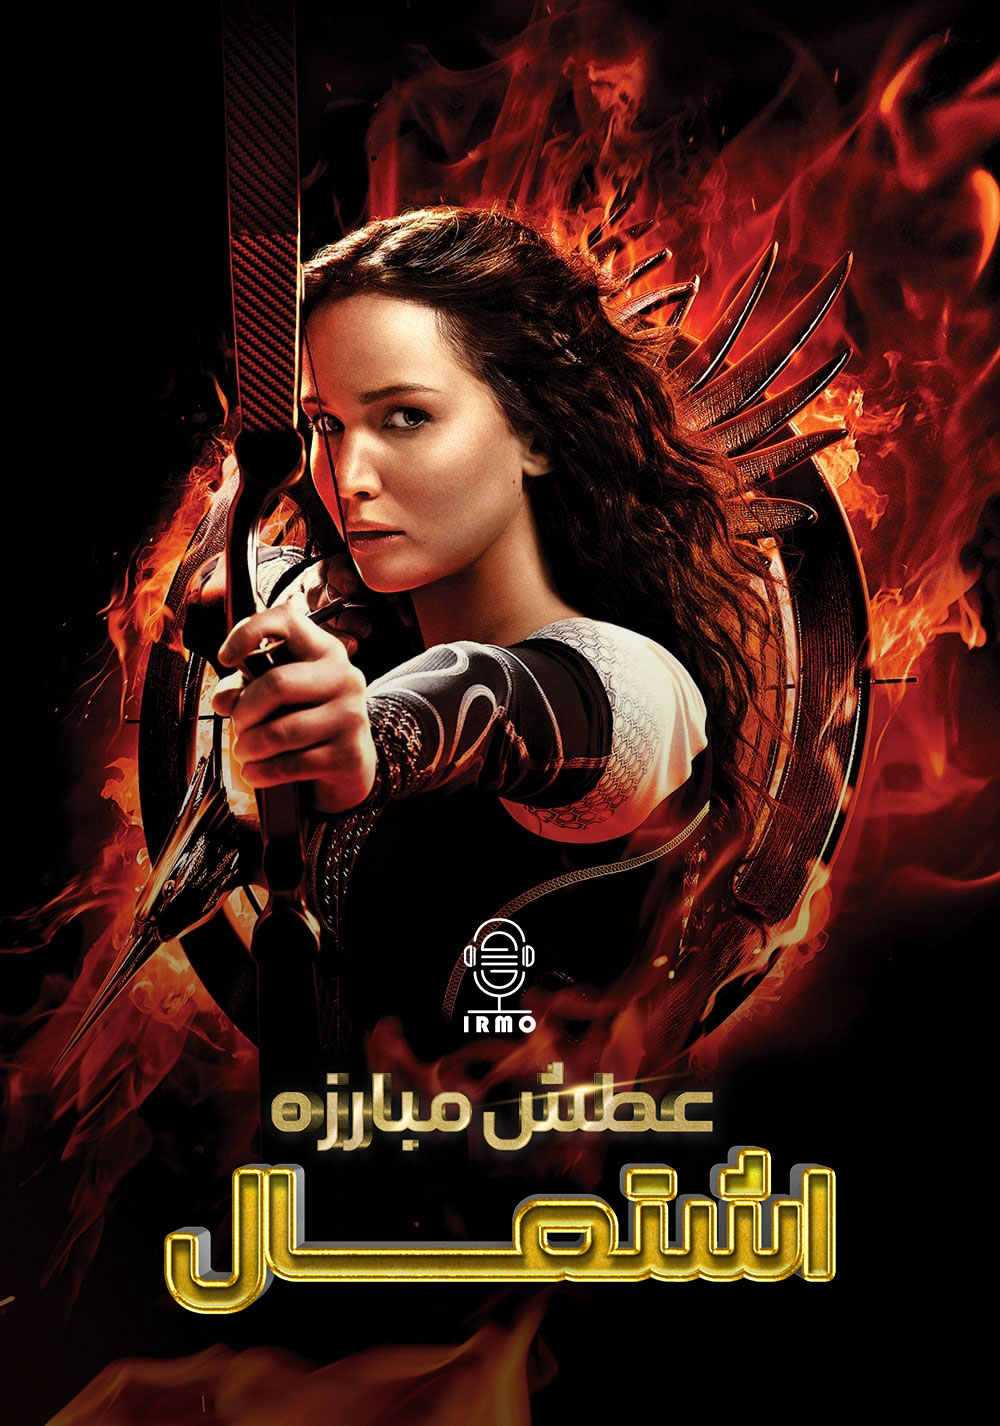 دانلود صوت دوبله فیلم The Hunger Games: Catching Fire